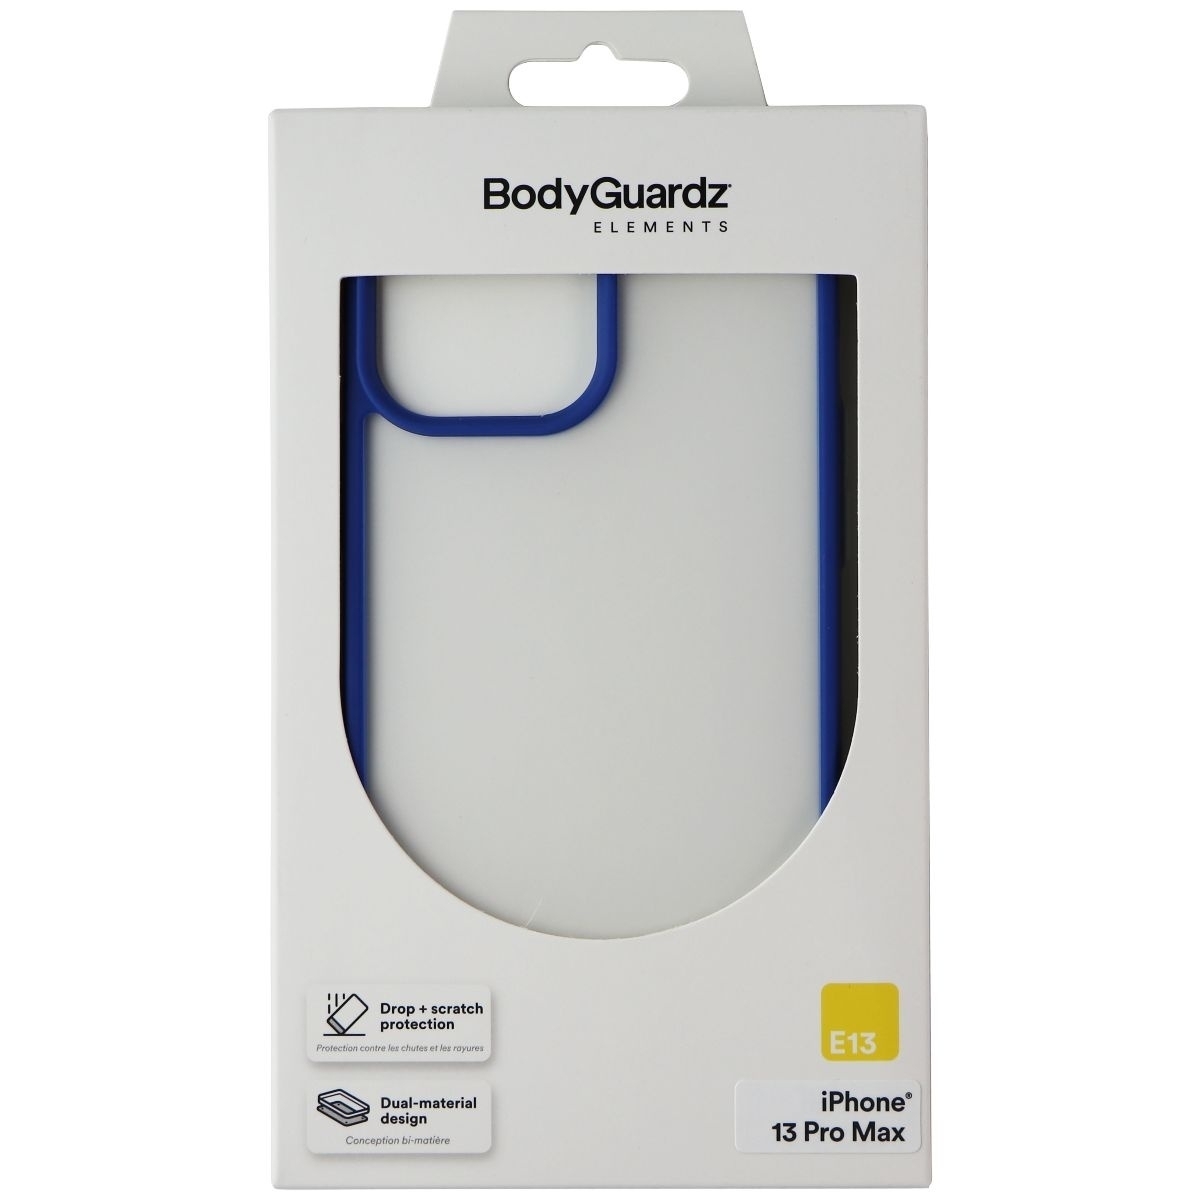 BodyGuardz Elements E13 Hard Case For IPhone 13 Pro Max - Dusty Blue